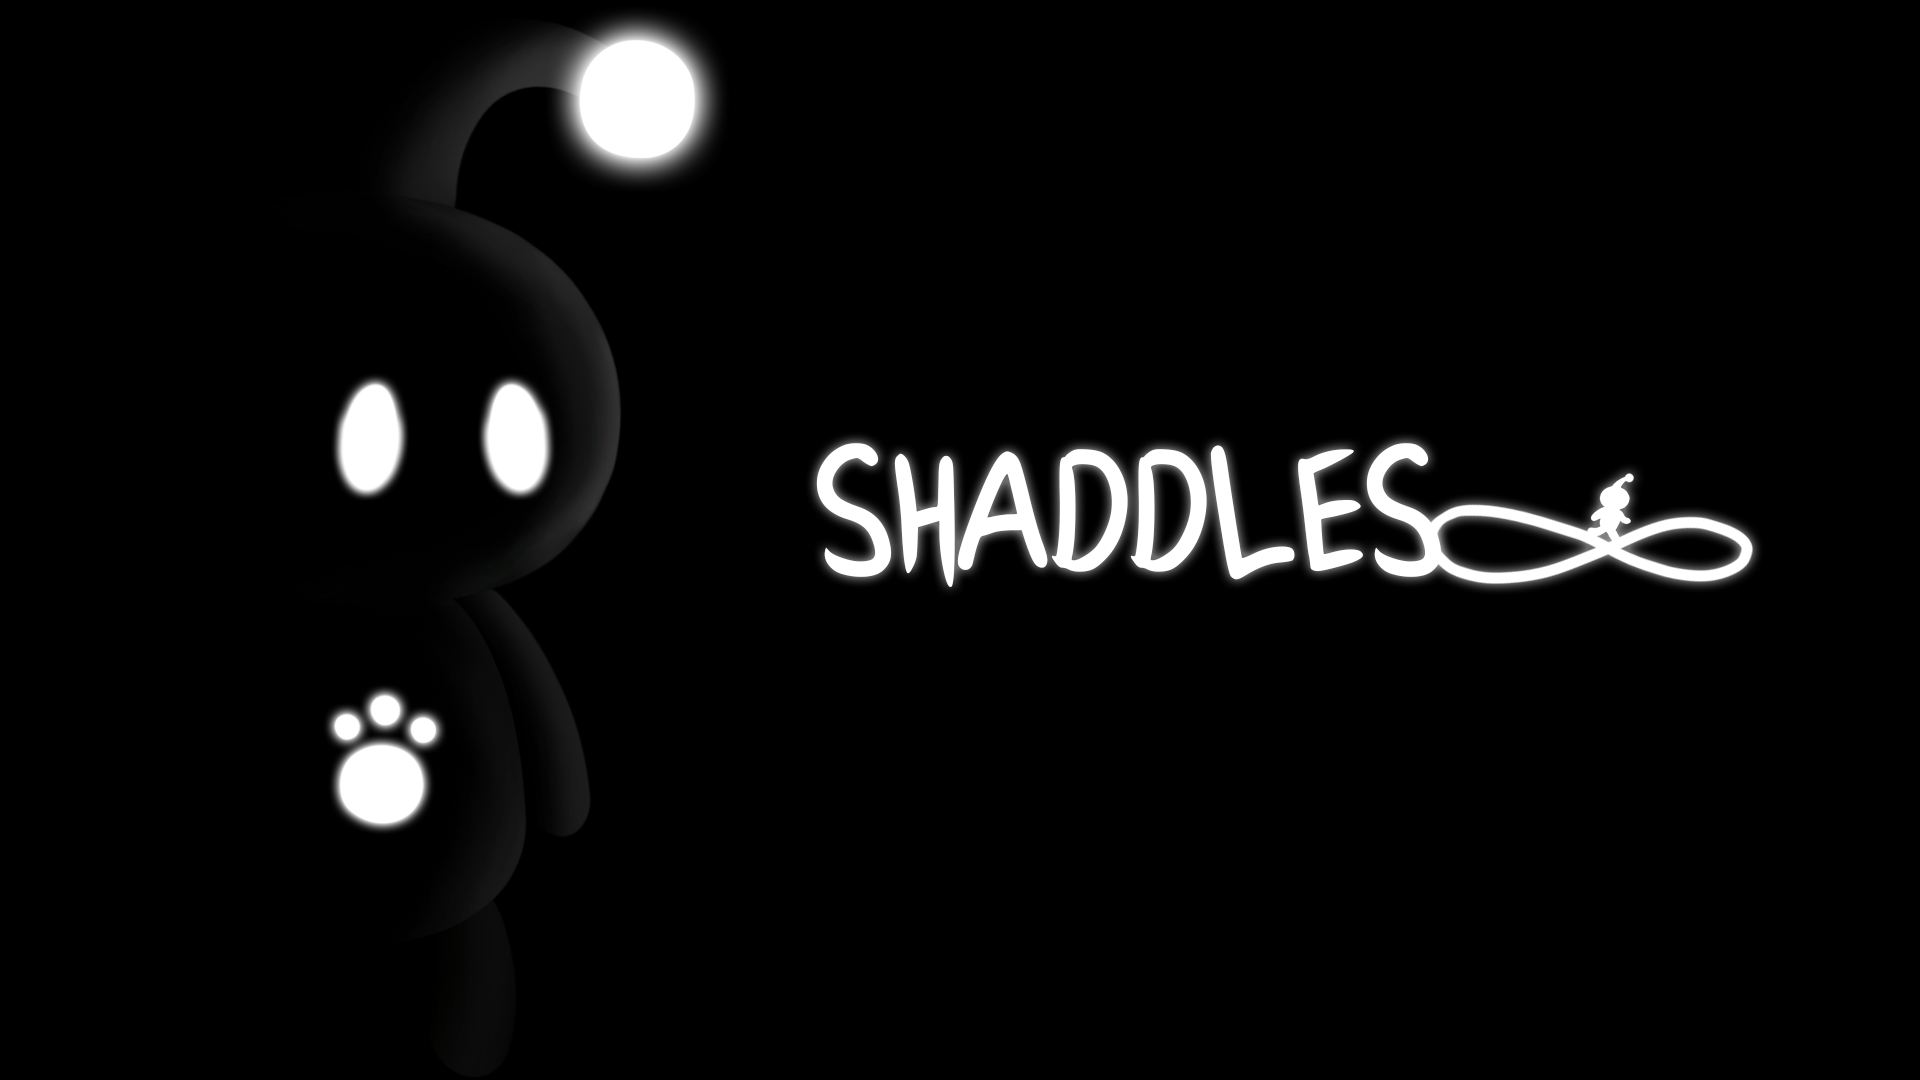 Shaddles